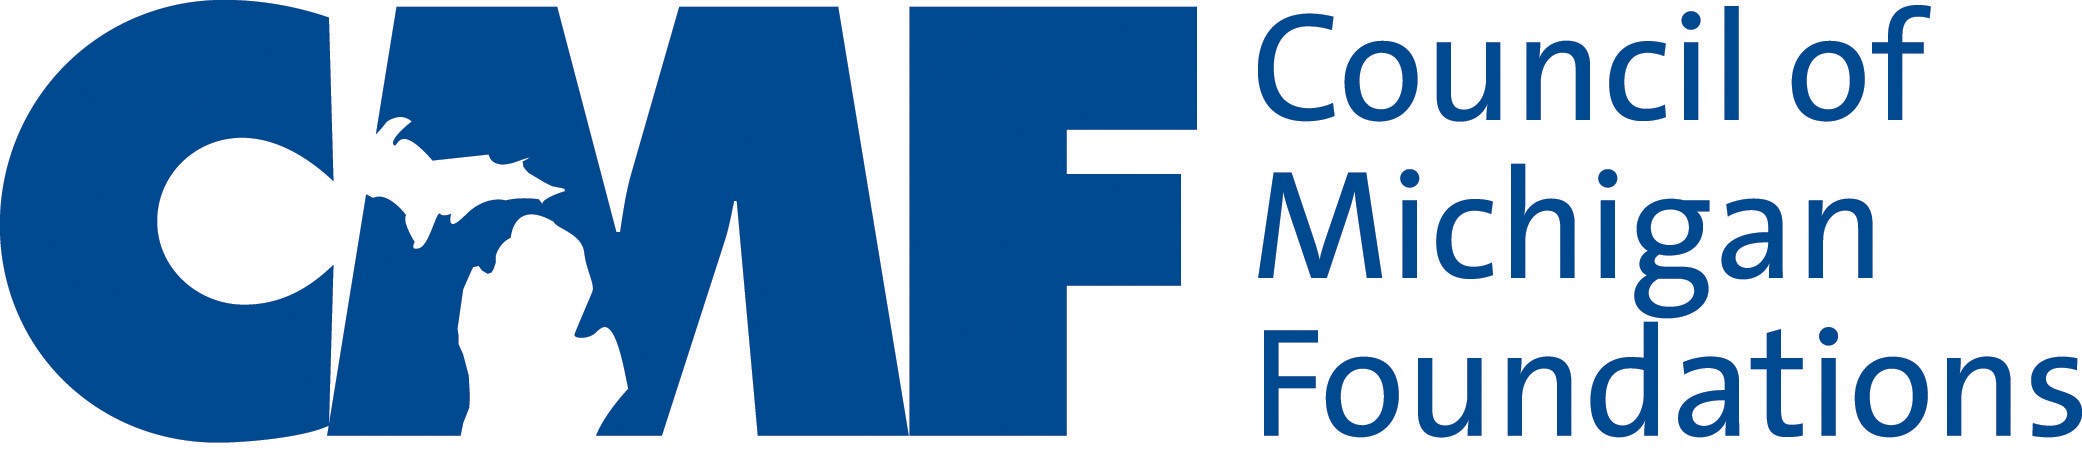 Council of Michigan Foundations Logo